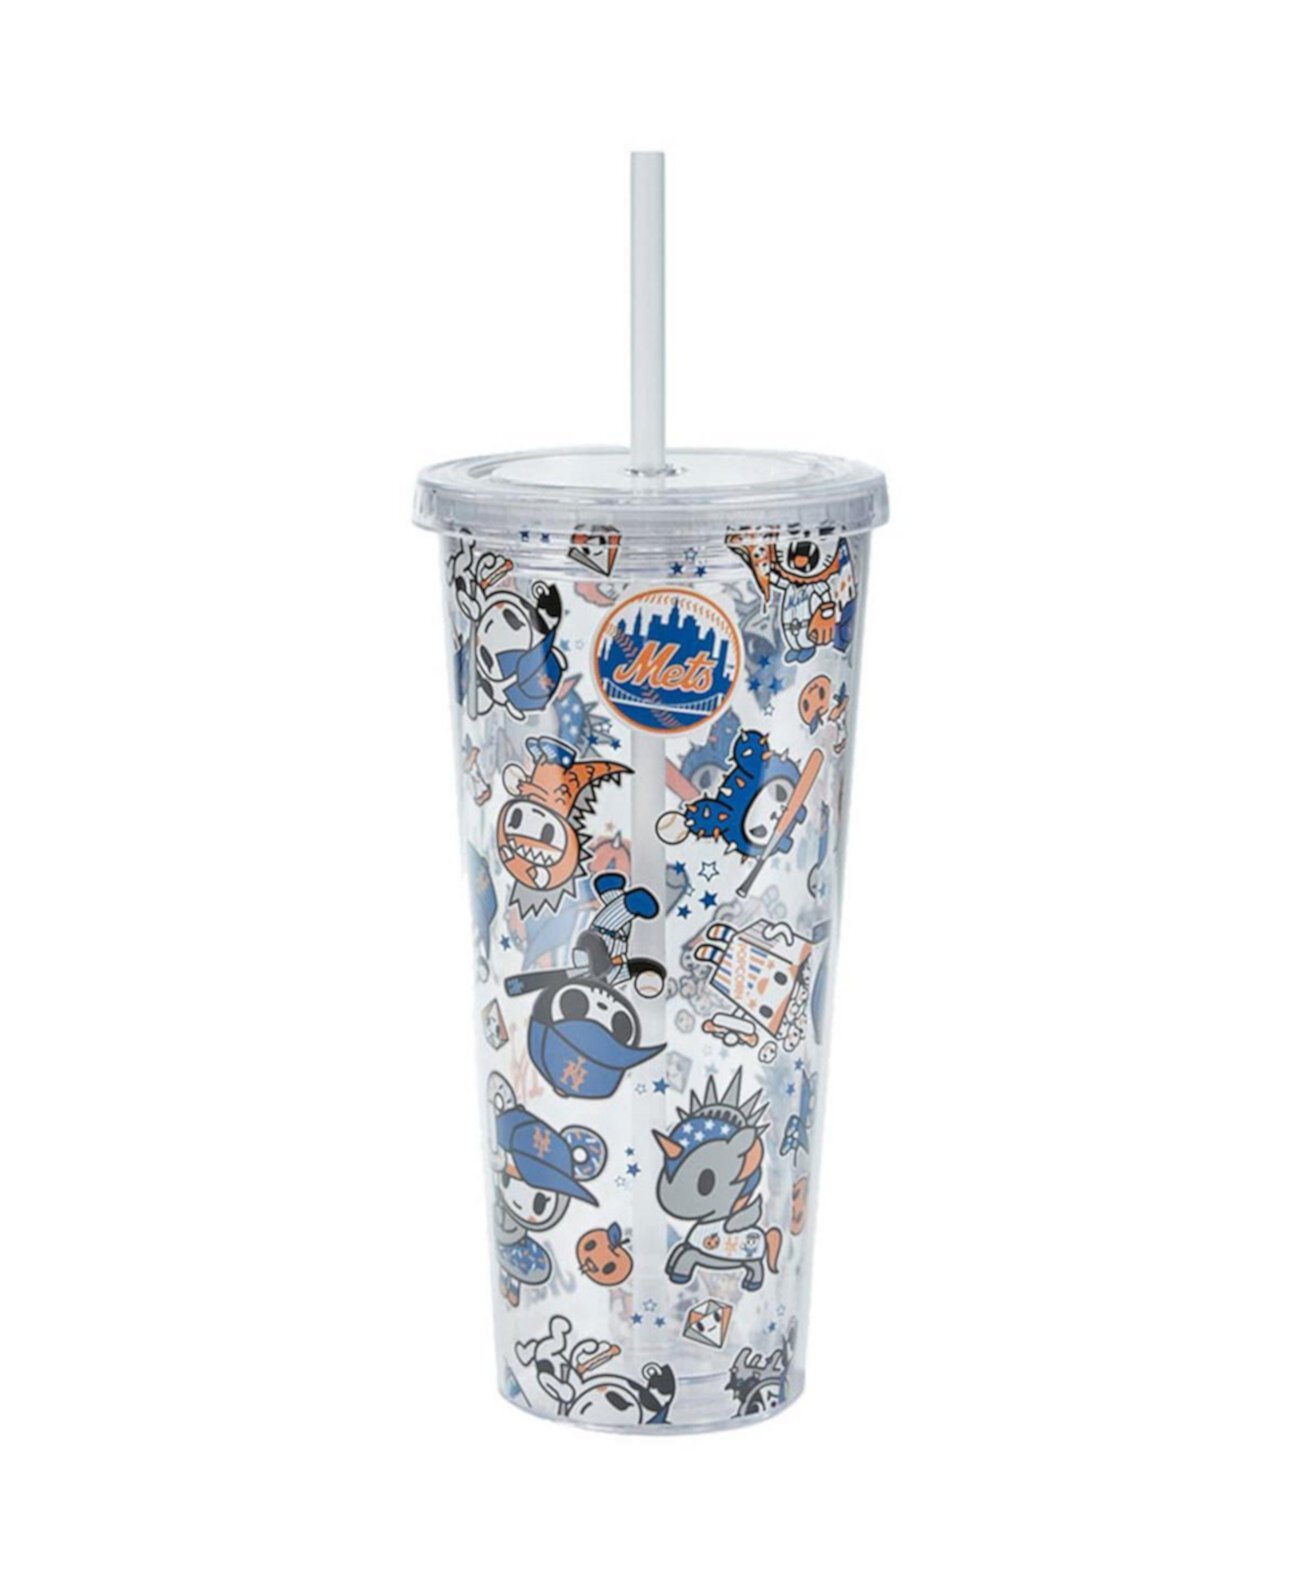 Акриловый стакан New York Mets на 24 унции Tokidoki